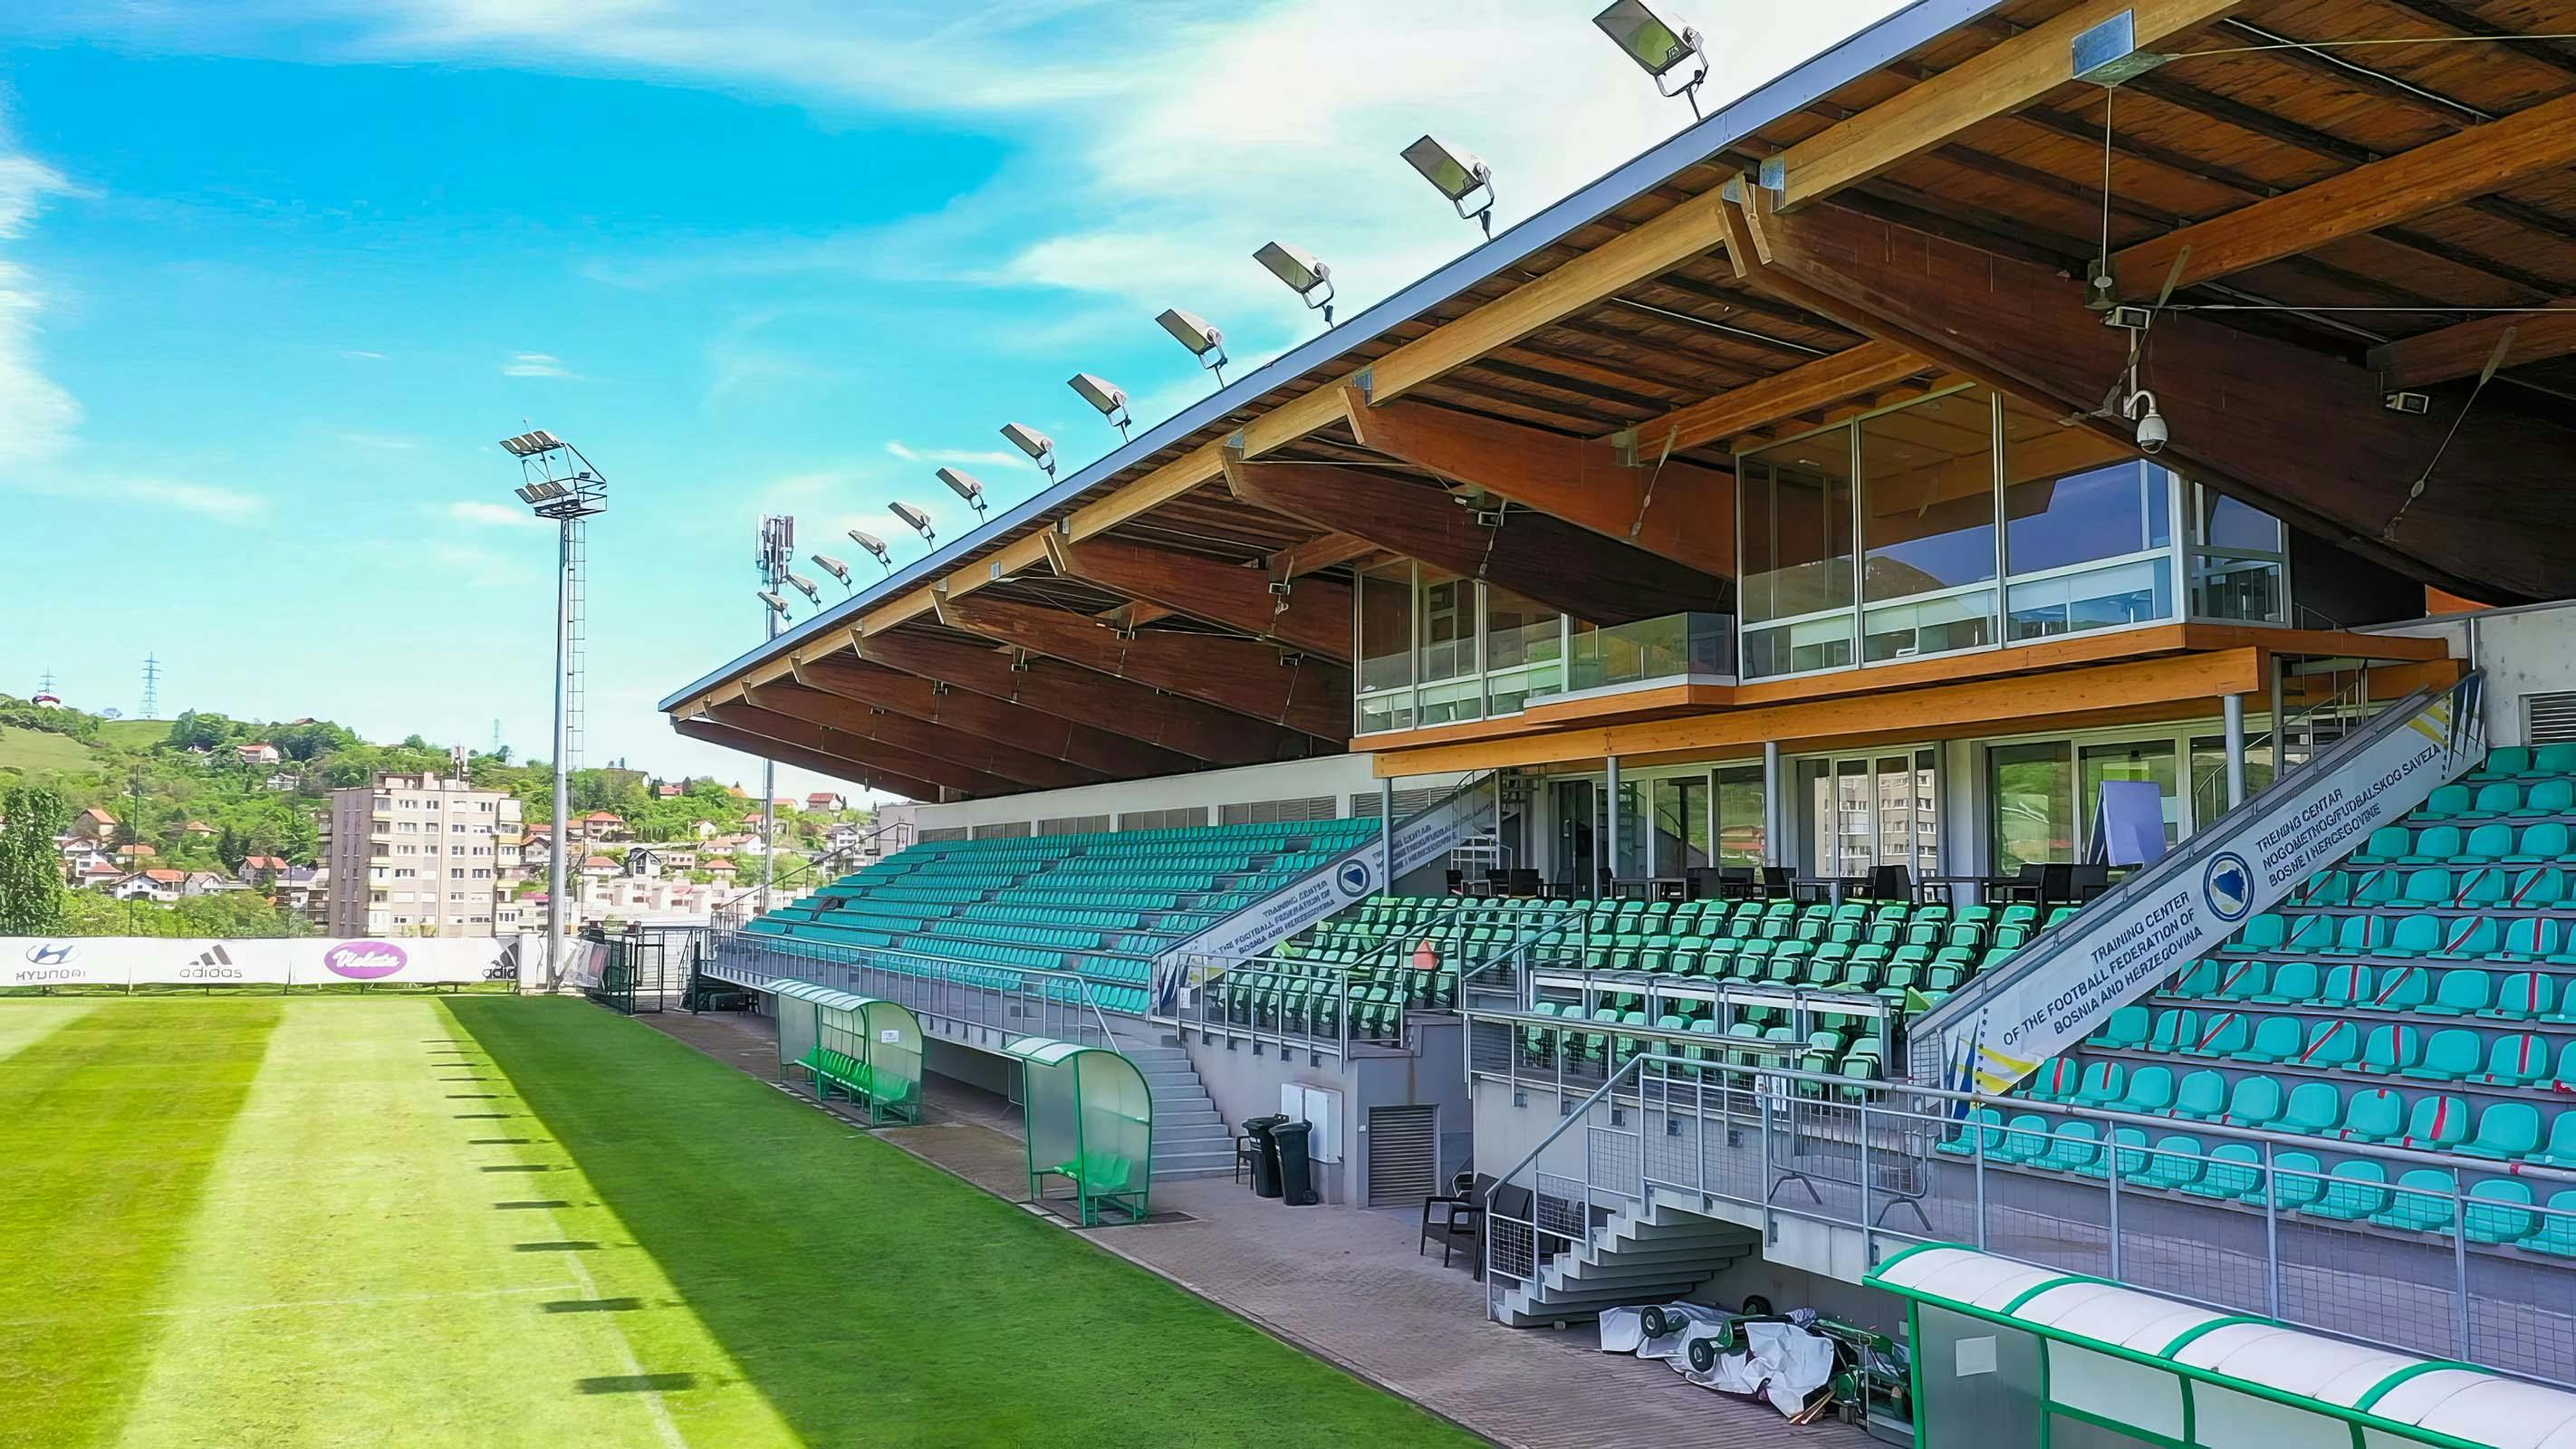 UEFA Training Camp featuring glulam roof